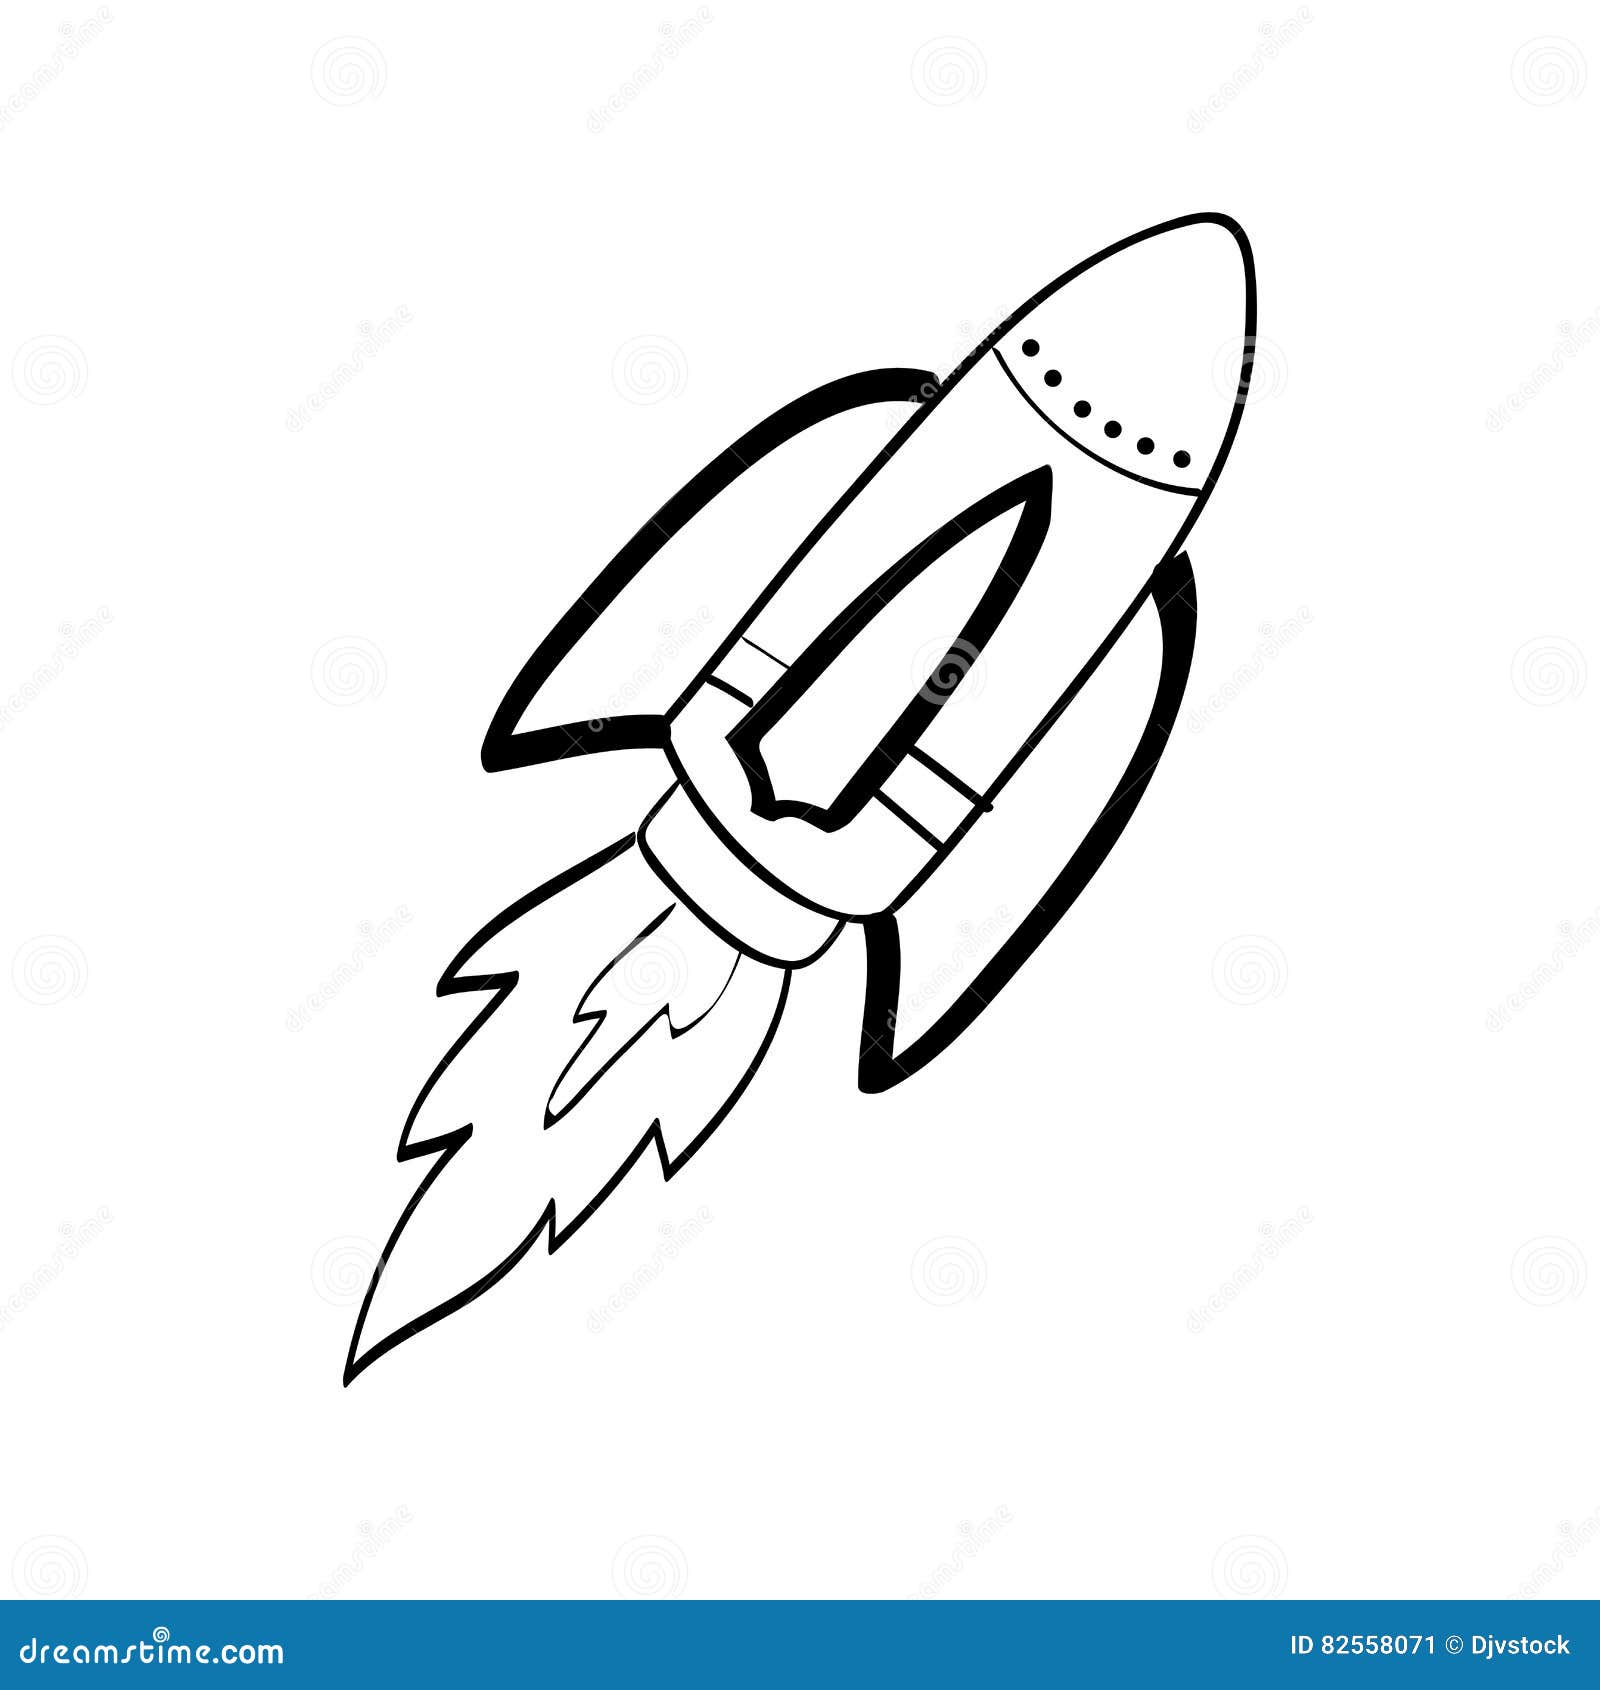 Rocket spaceship draw stock illustration. Illustration of future - 82558071